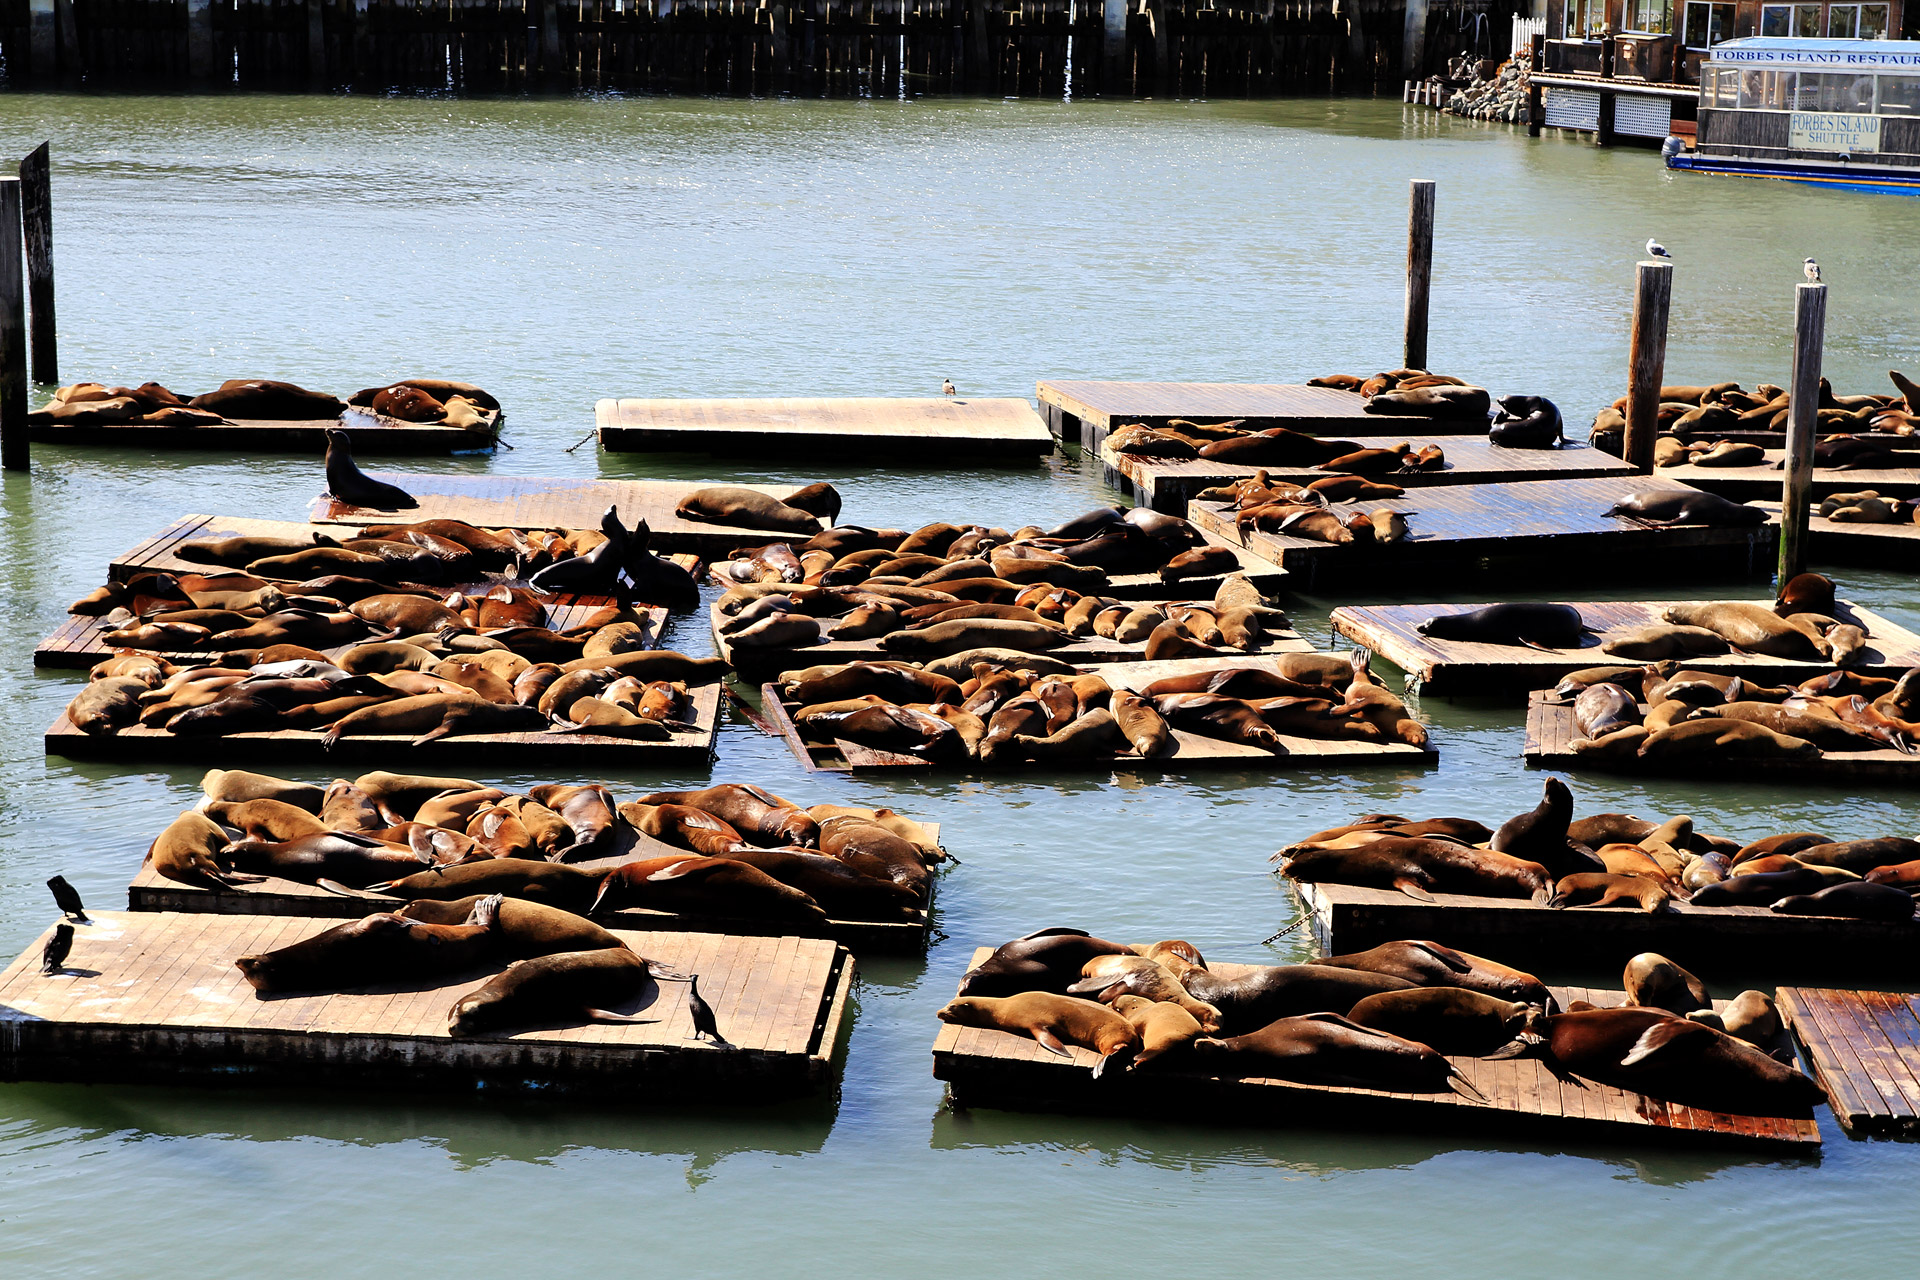 sea lions pier 39 san francisco free photo